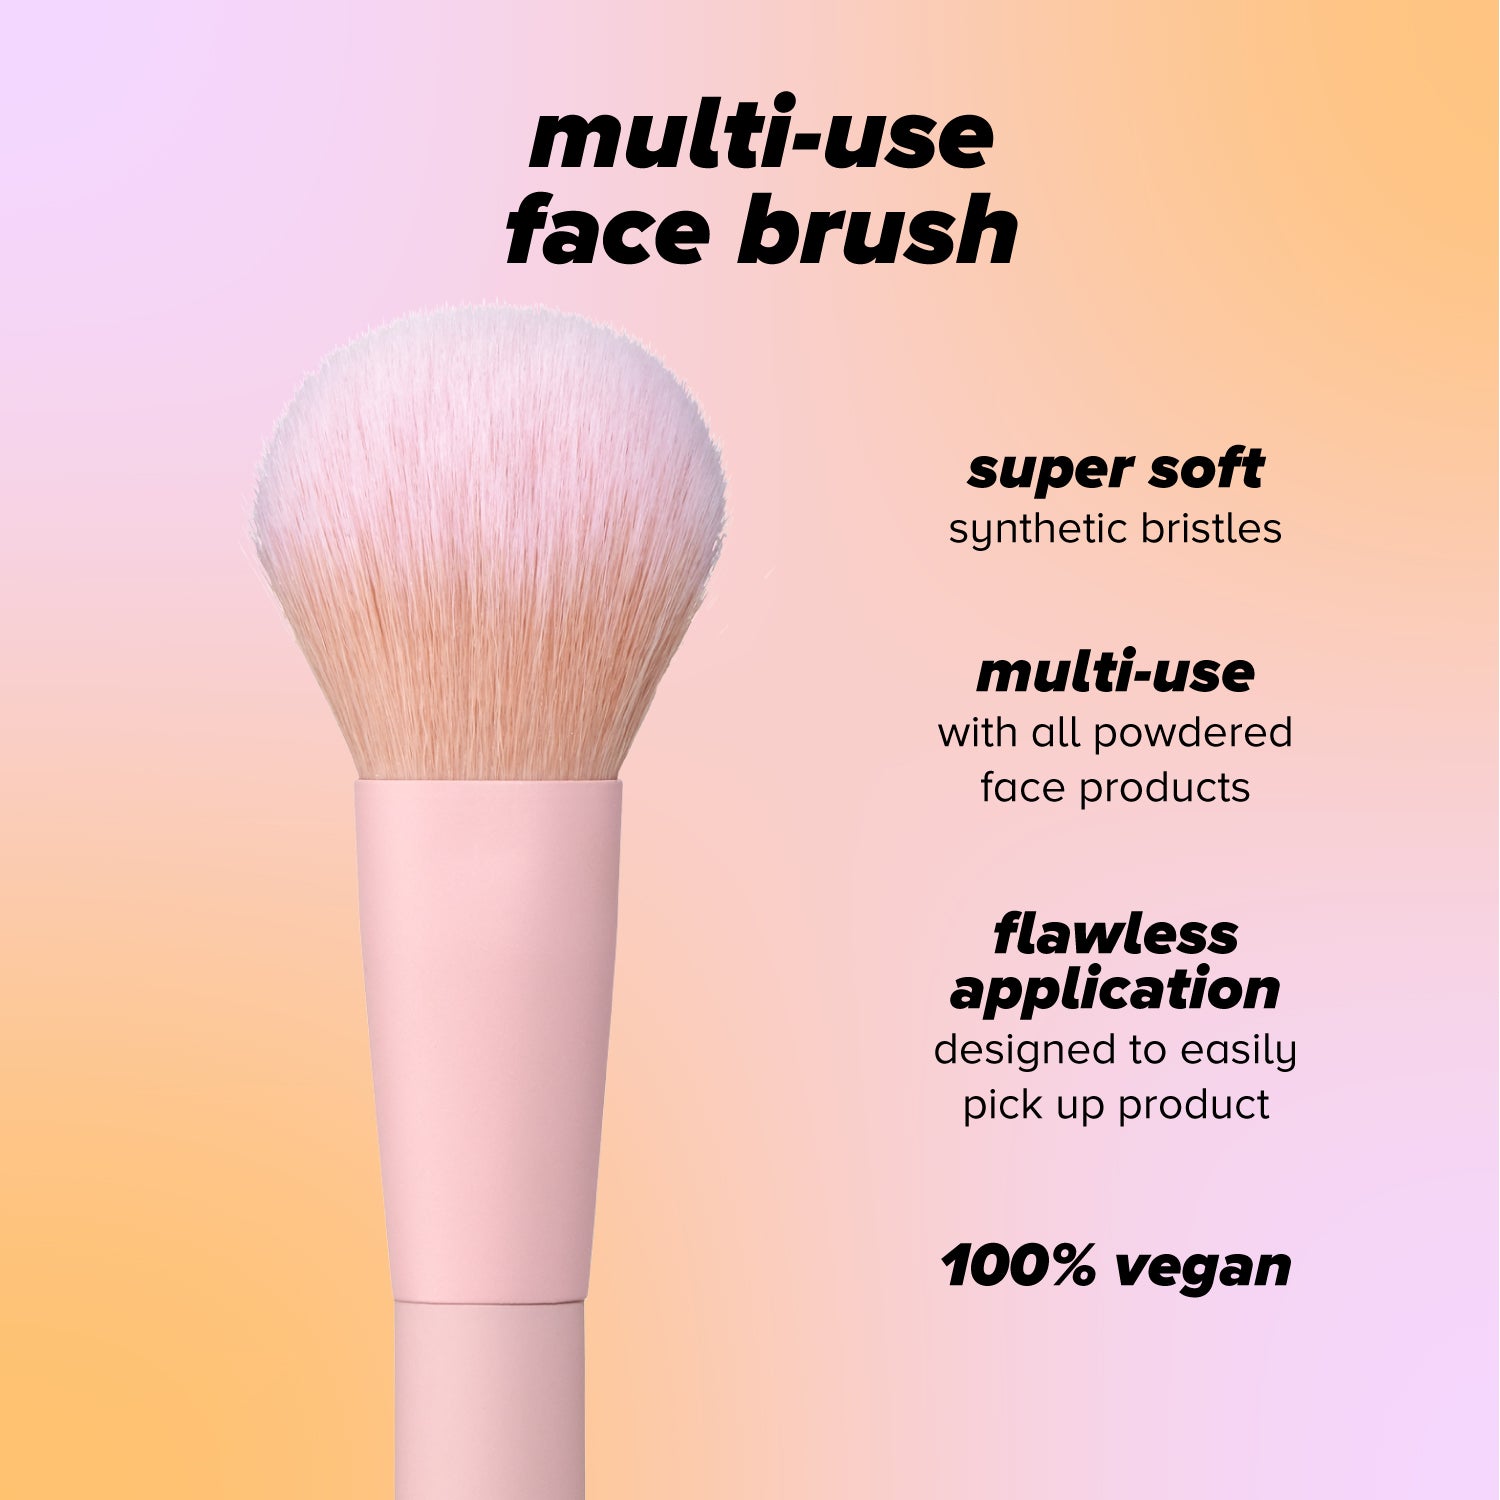 multi-use face brush